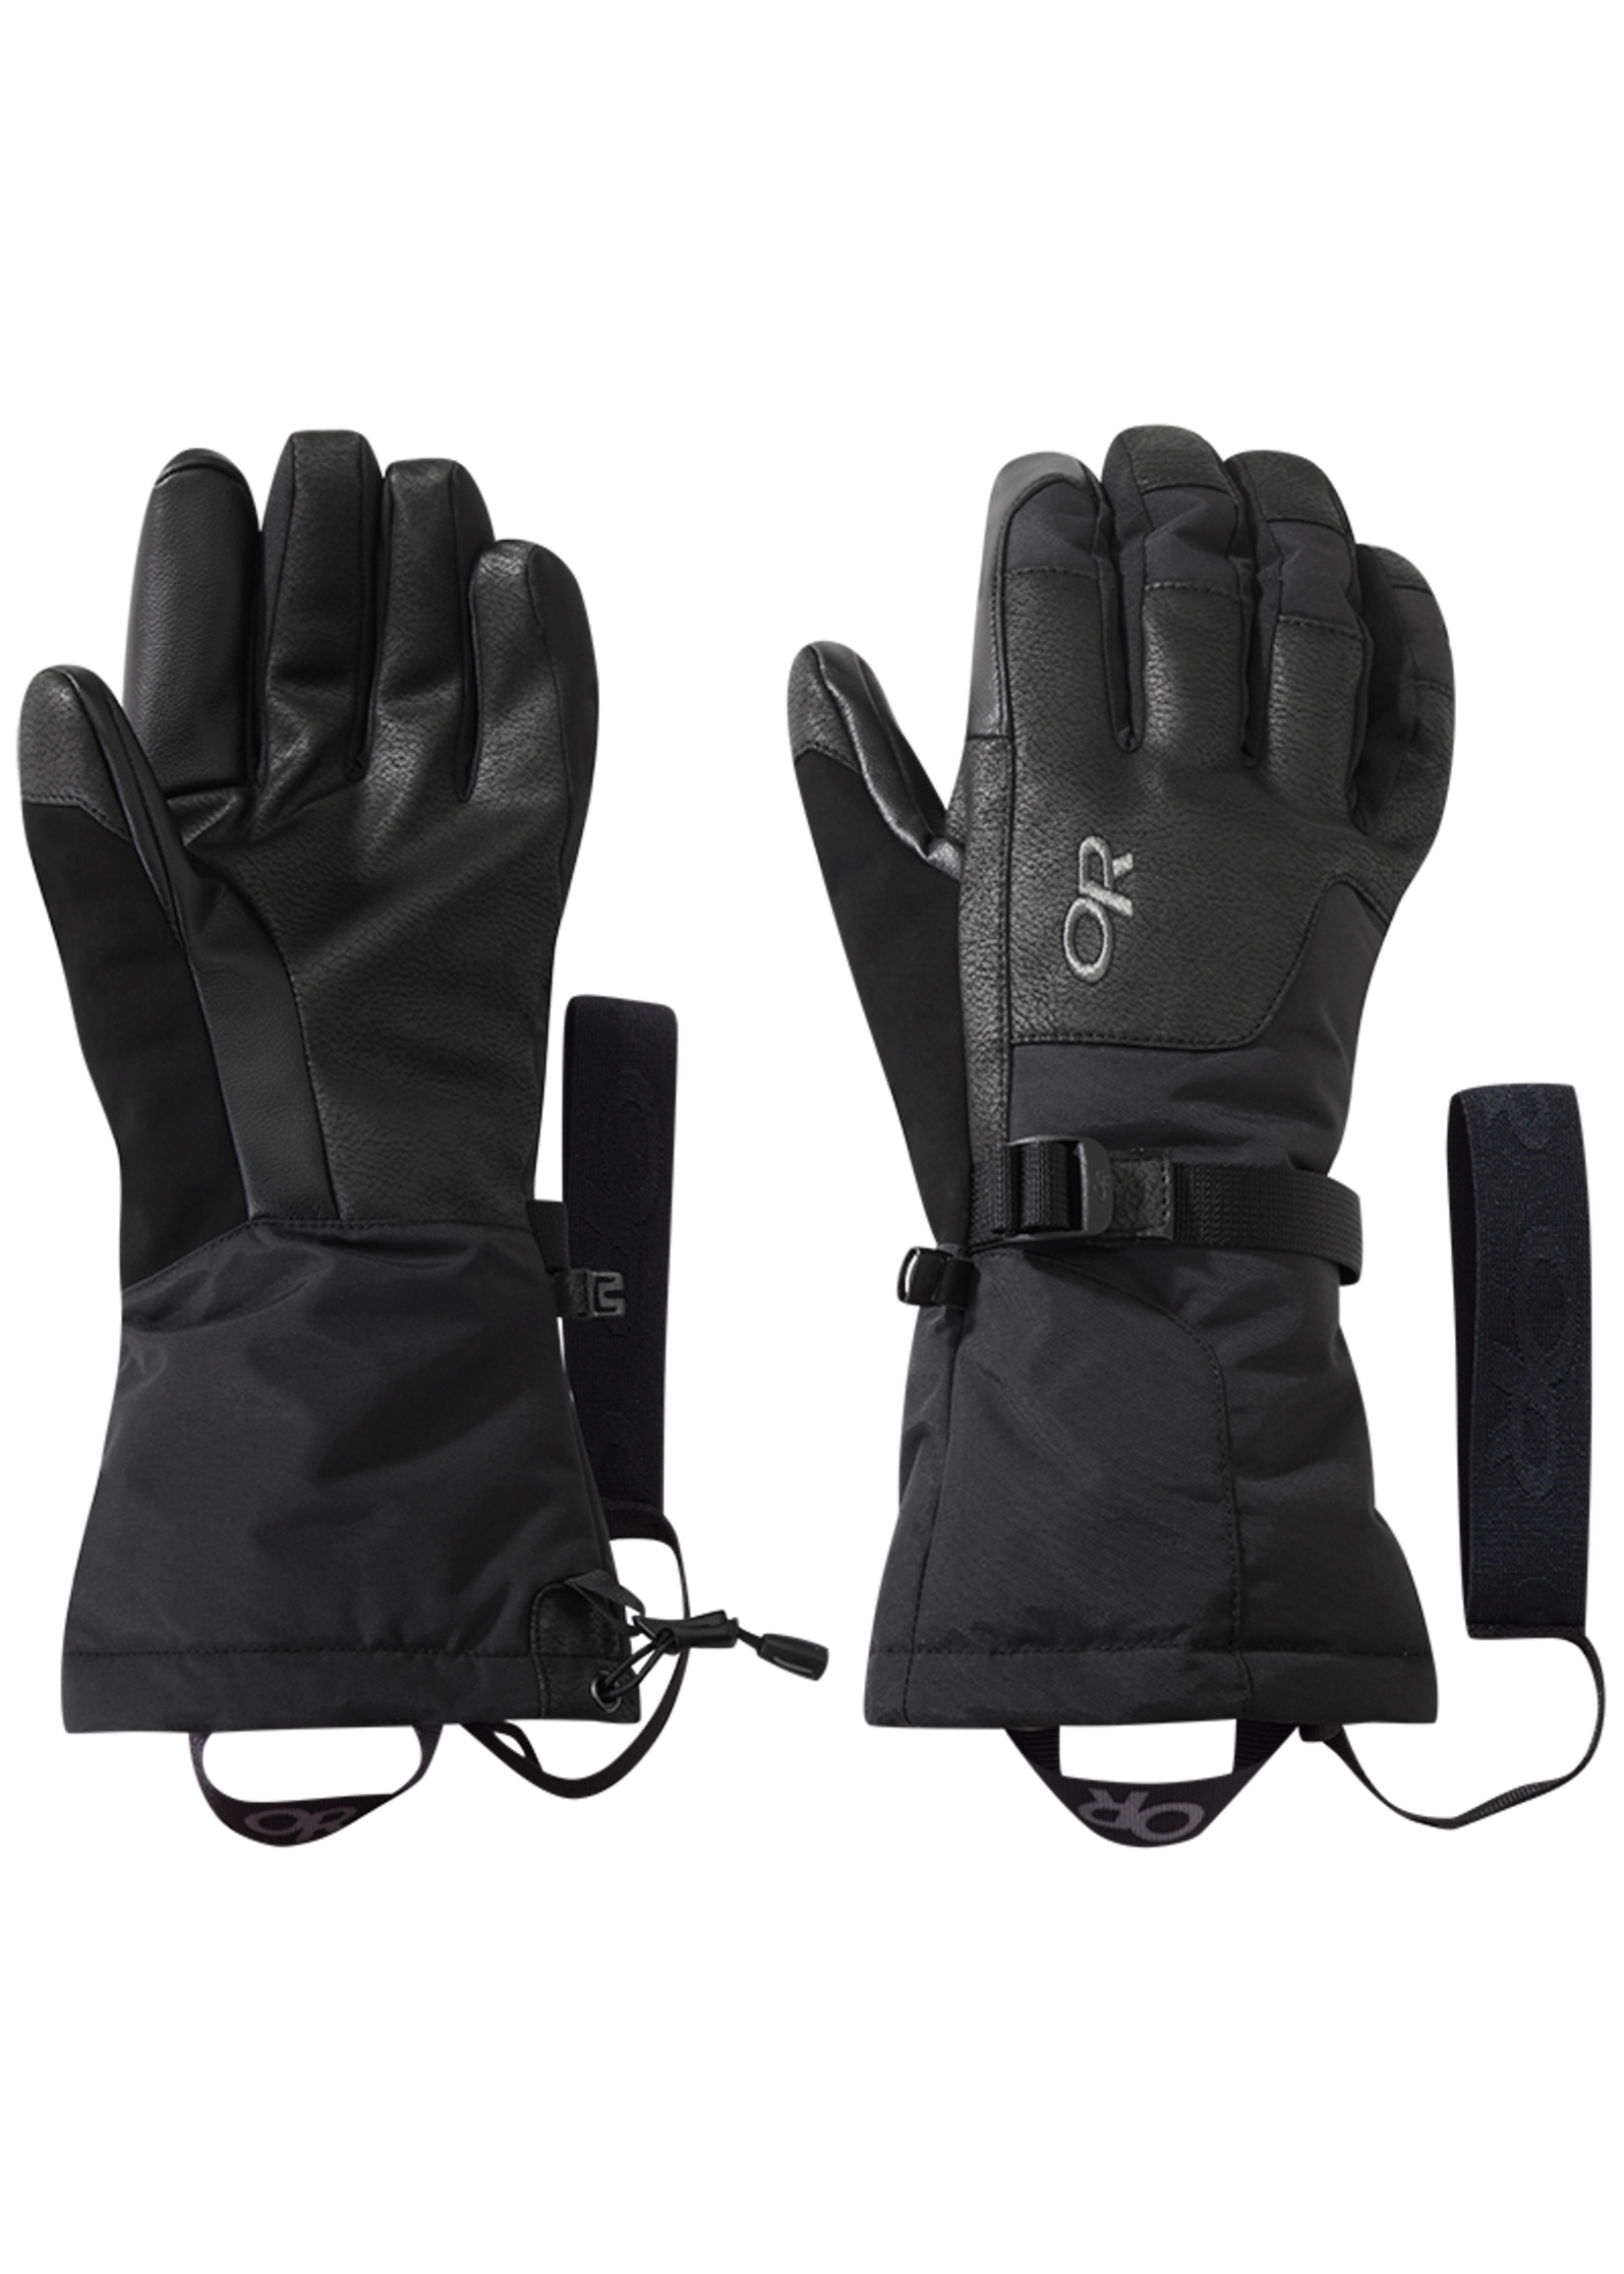 Outdoor Reseach Men's Revolution Sensor Gloves